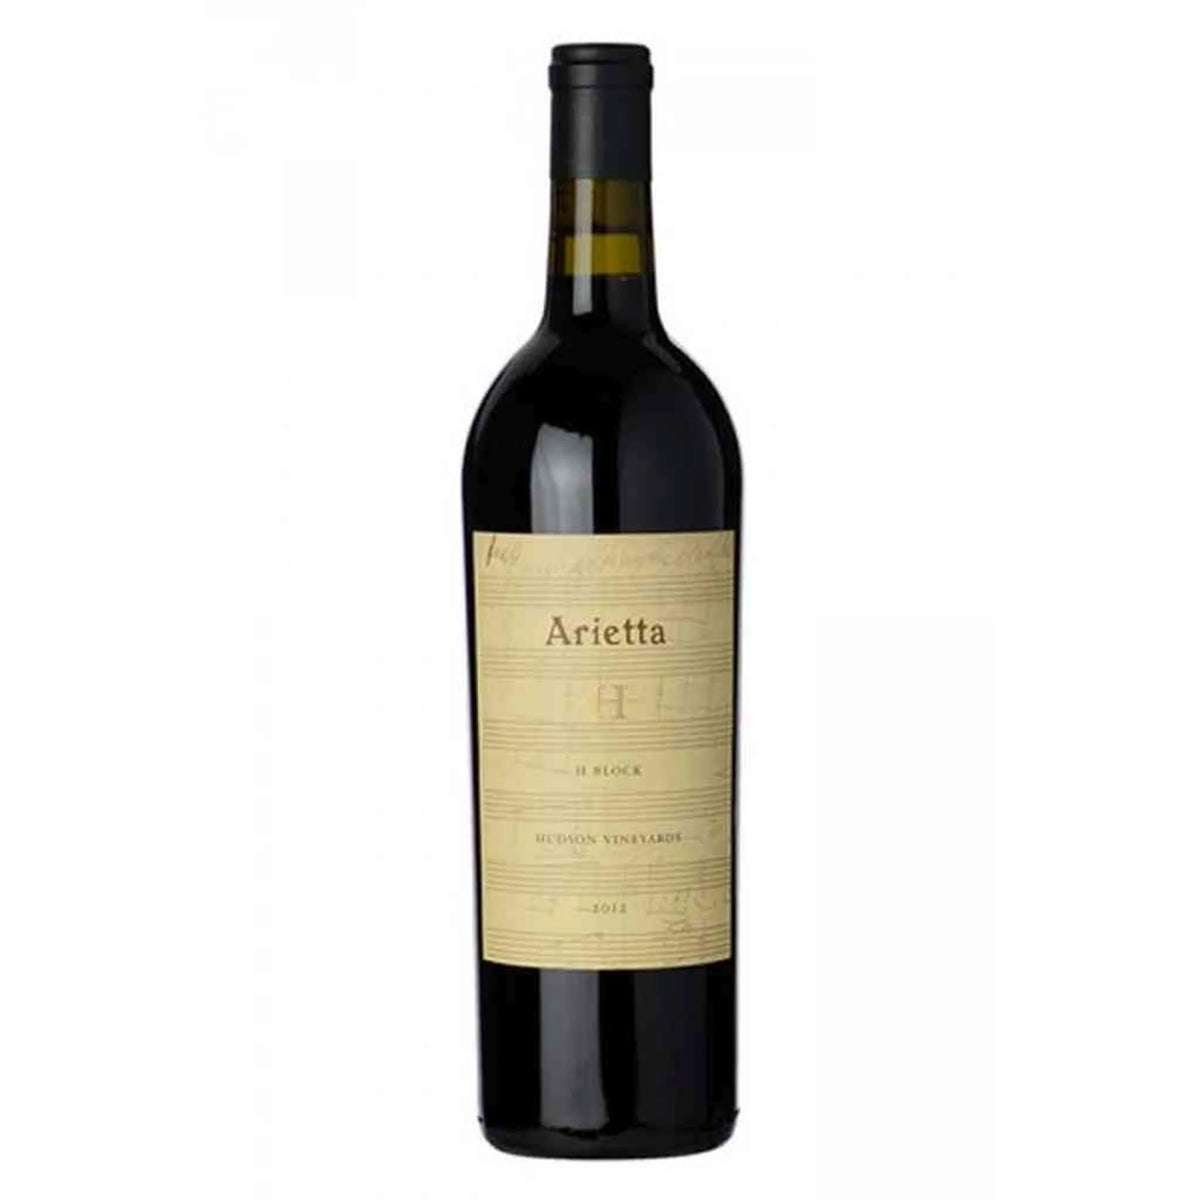 Arietta-Rotwein-Cabernet Franc, Merlot-2013 Red Wine H Block Hudson-WINECOM